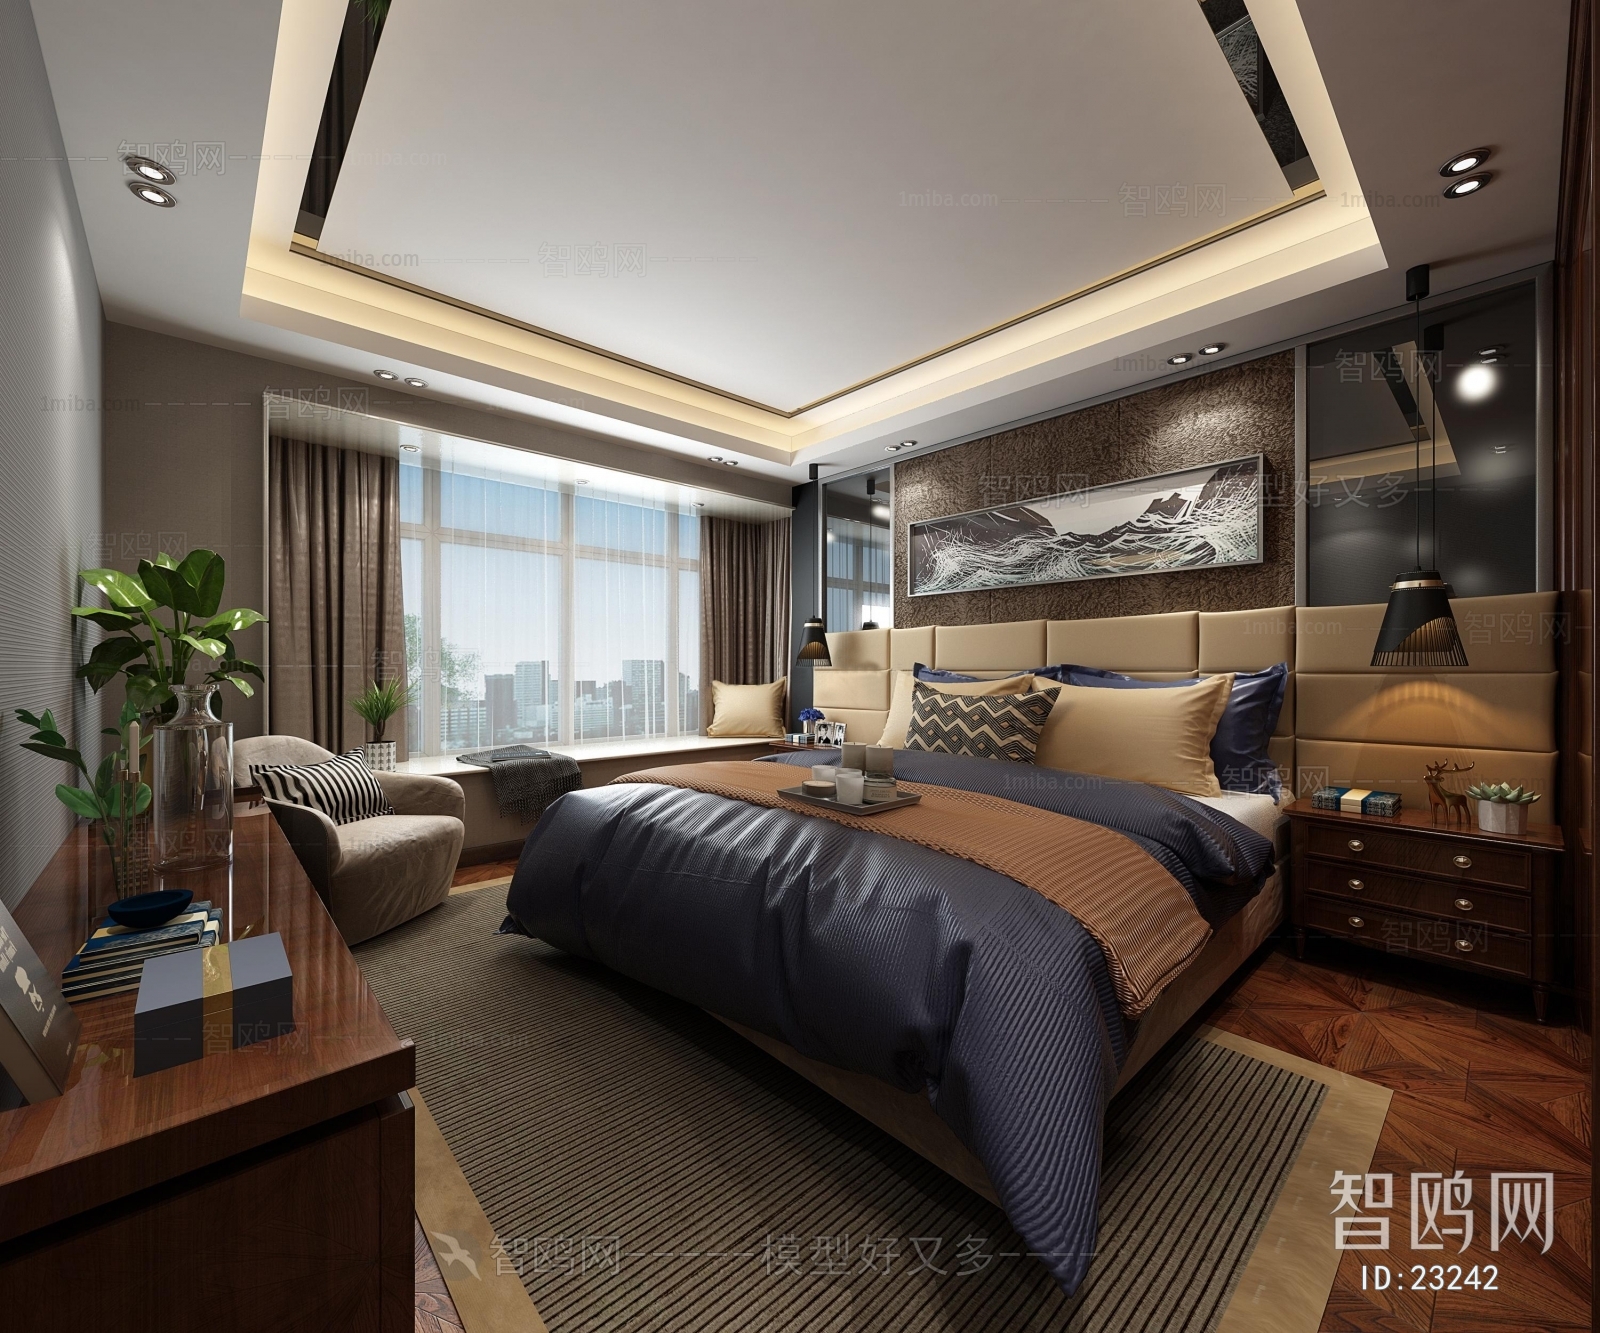 Modern Hong Kong Style Bedroom